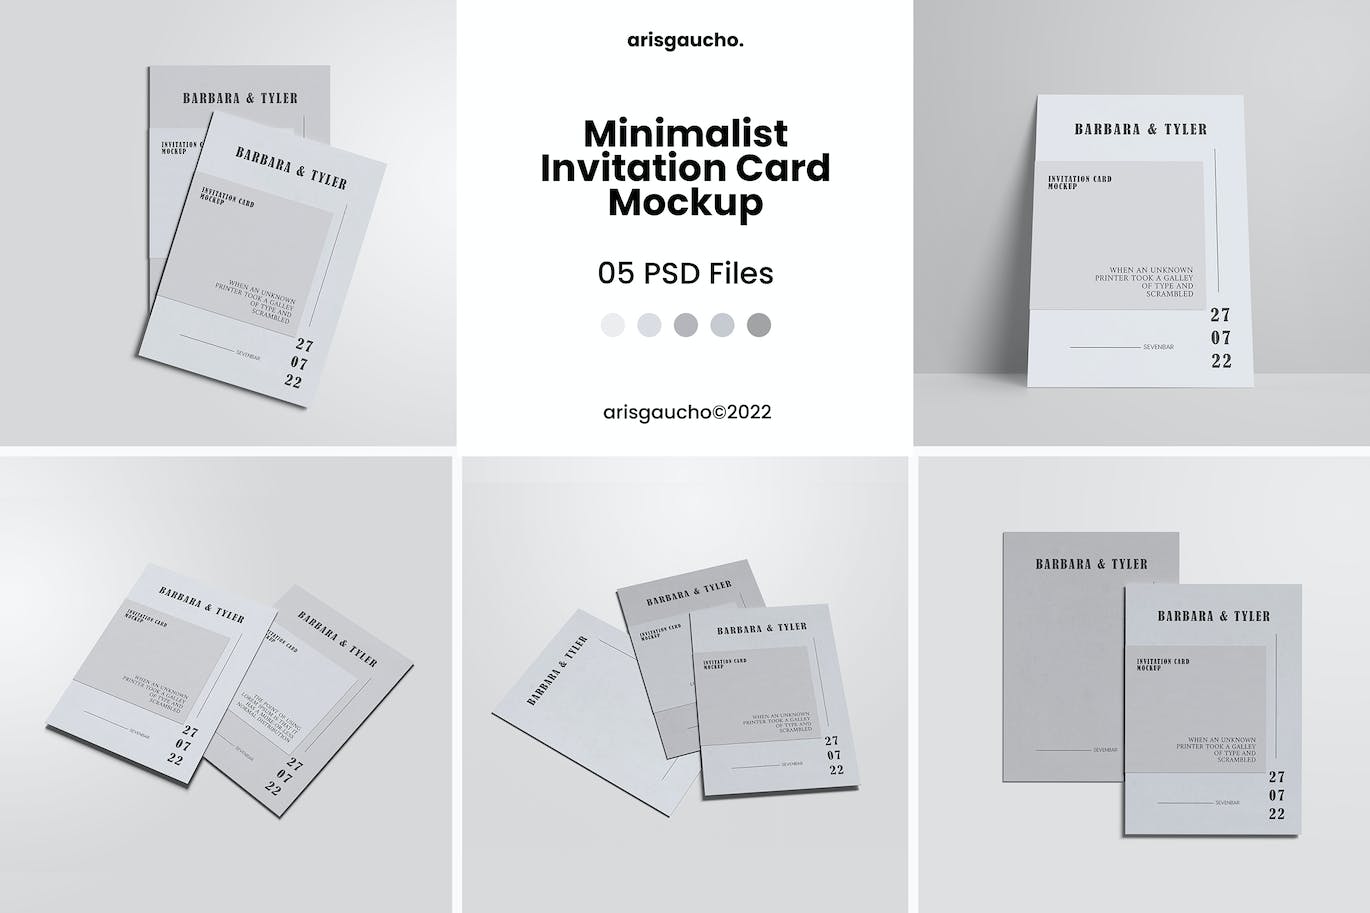 极简邀请函/卡设计样机 Minimalist Invitation Card Mockup